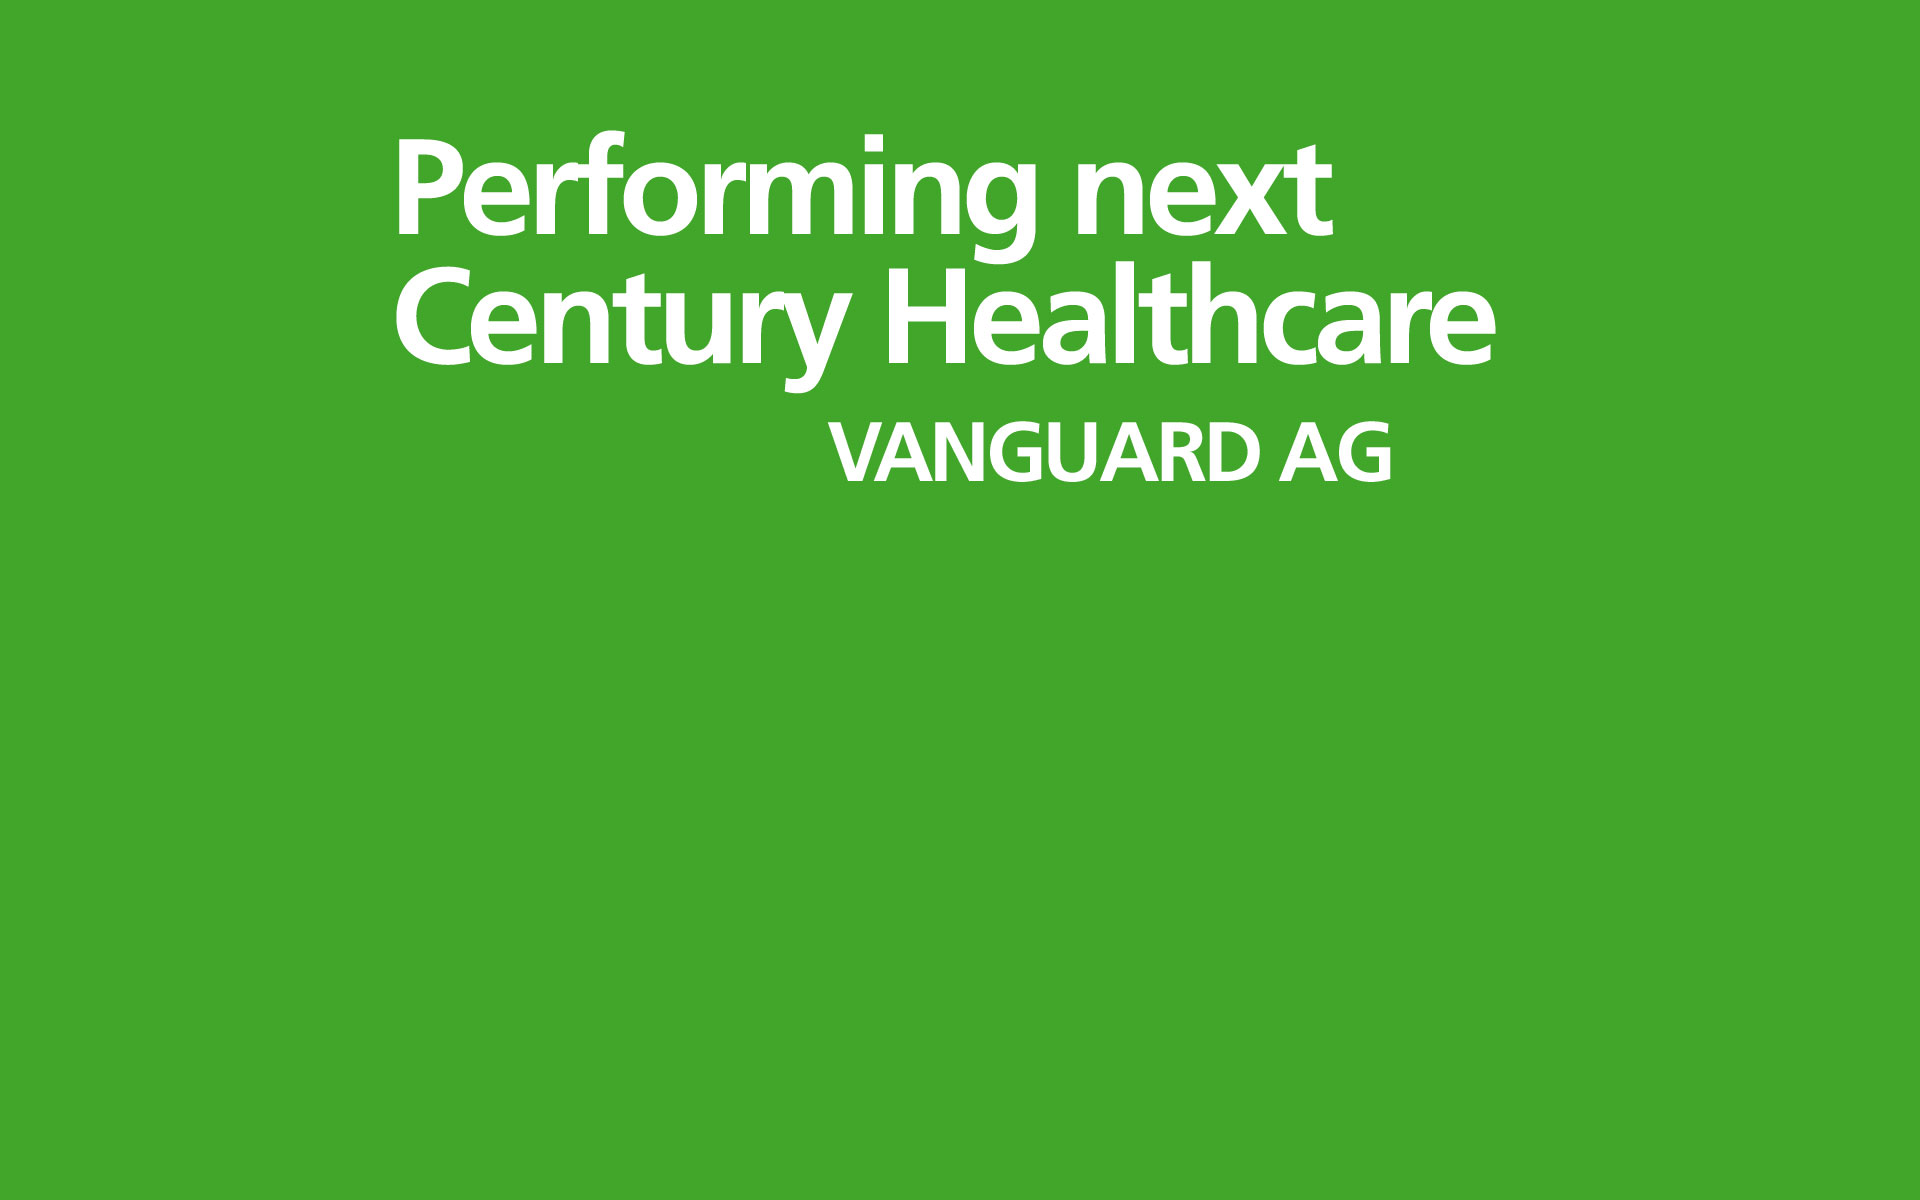 VANGUARD – Performing next Century Healthcare